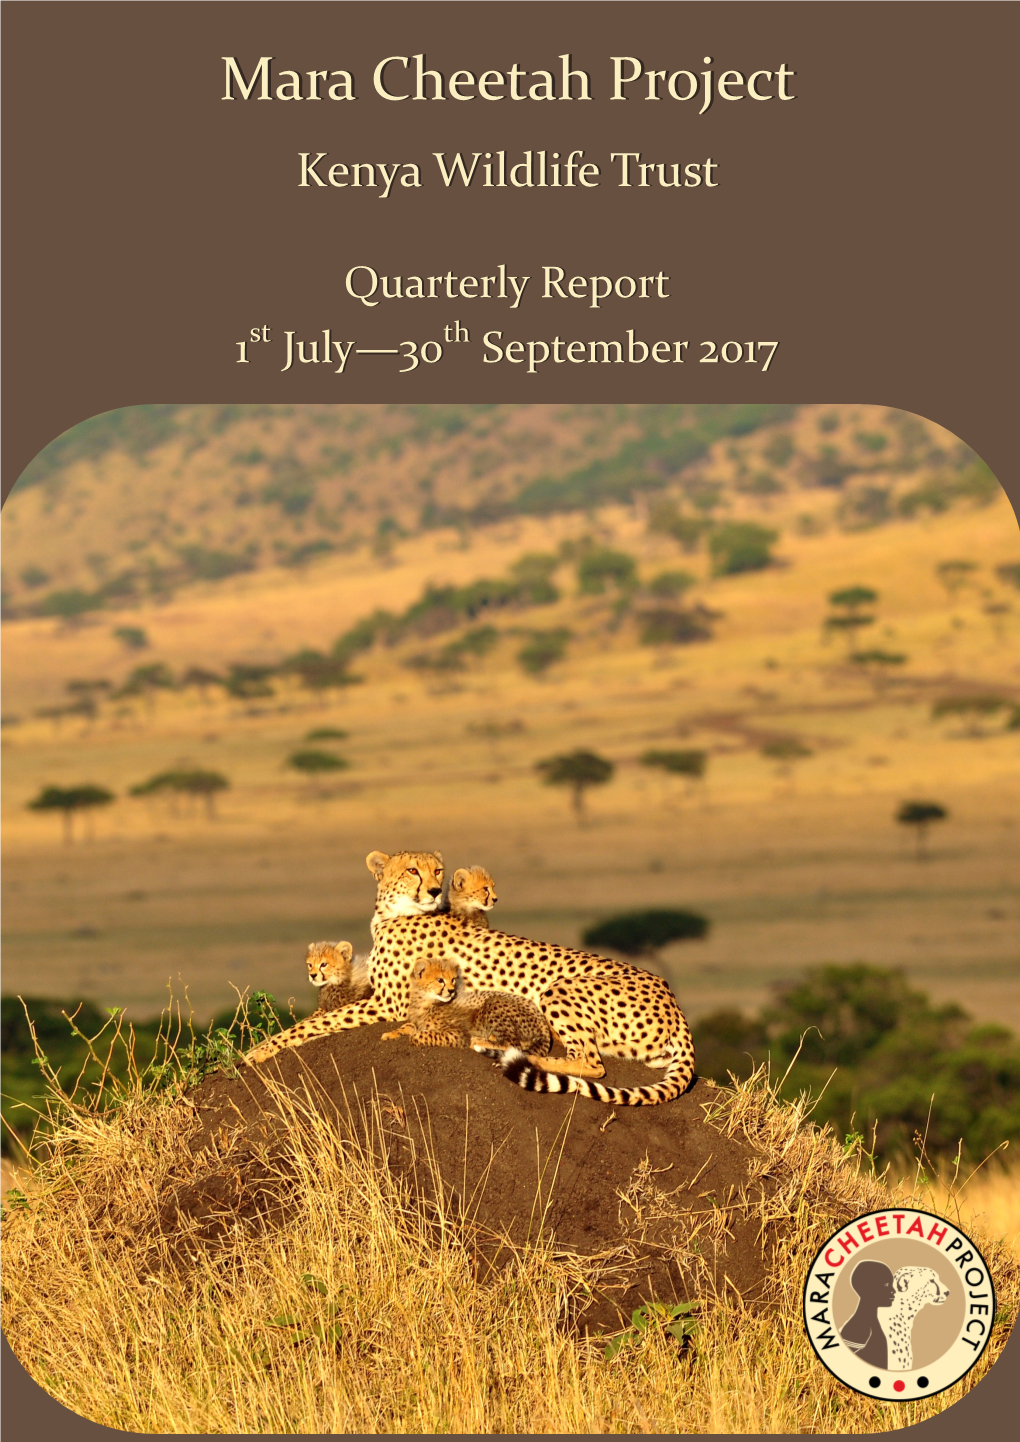 Mara Cheetah Project | Annual Report 2014 Maramara Cheetahcheetah Projectproject Kenyakenya Wildlifewildlife Trusttrust